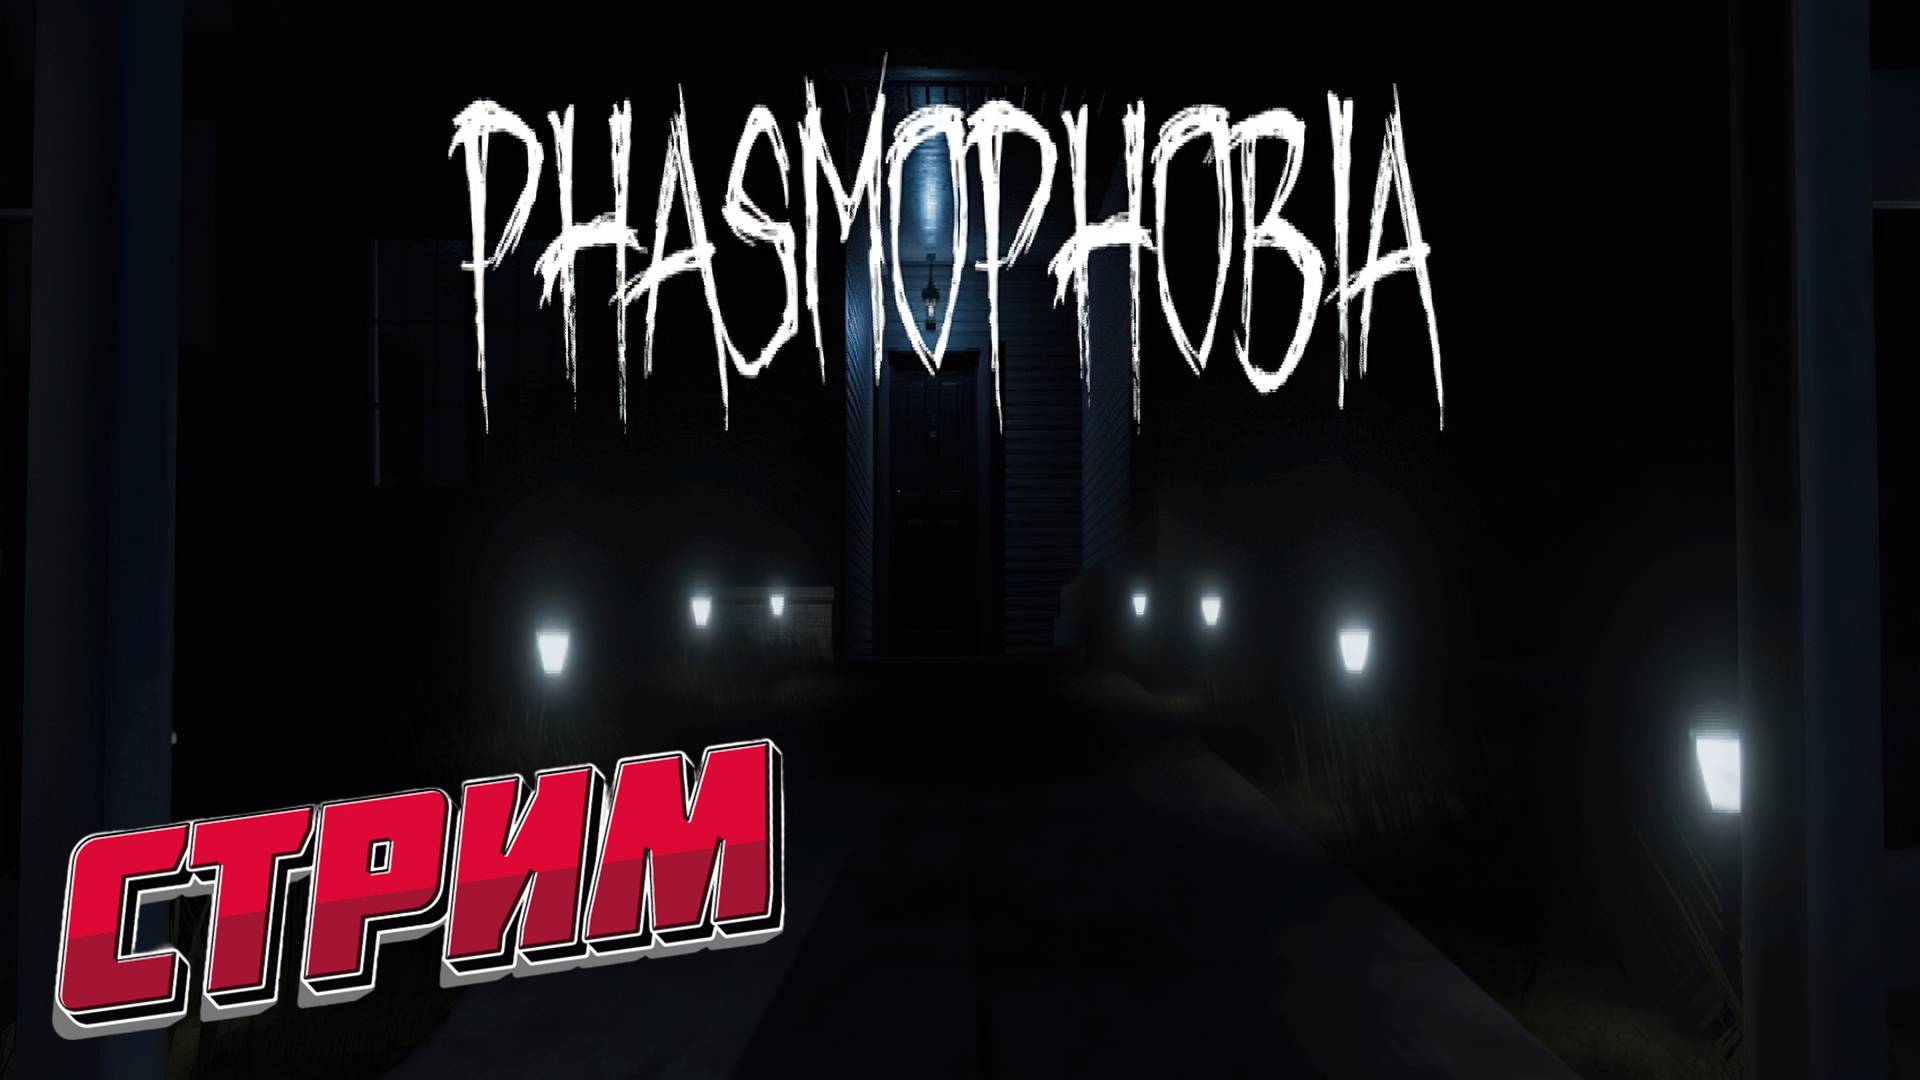 ФАЗМАГОРИЯ ЖДЁТ НАС АГА! PHASMAPHOBIA СТРИМ 1 #phasmaphobia